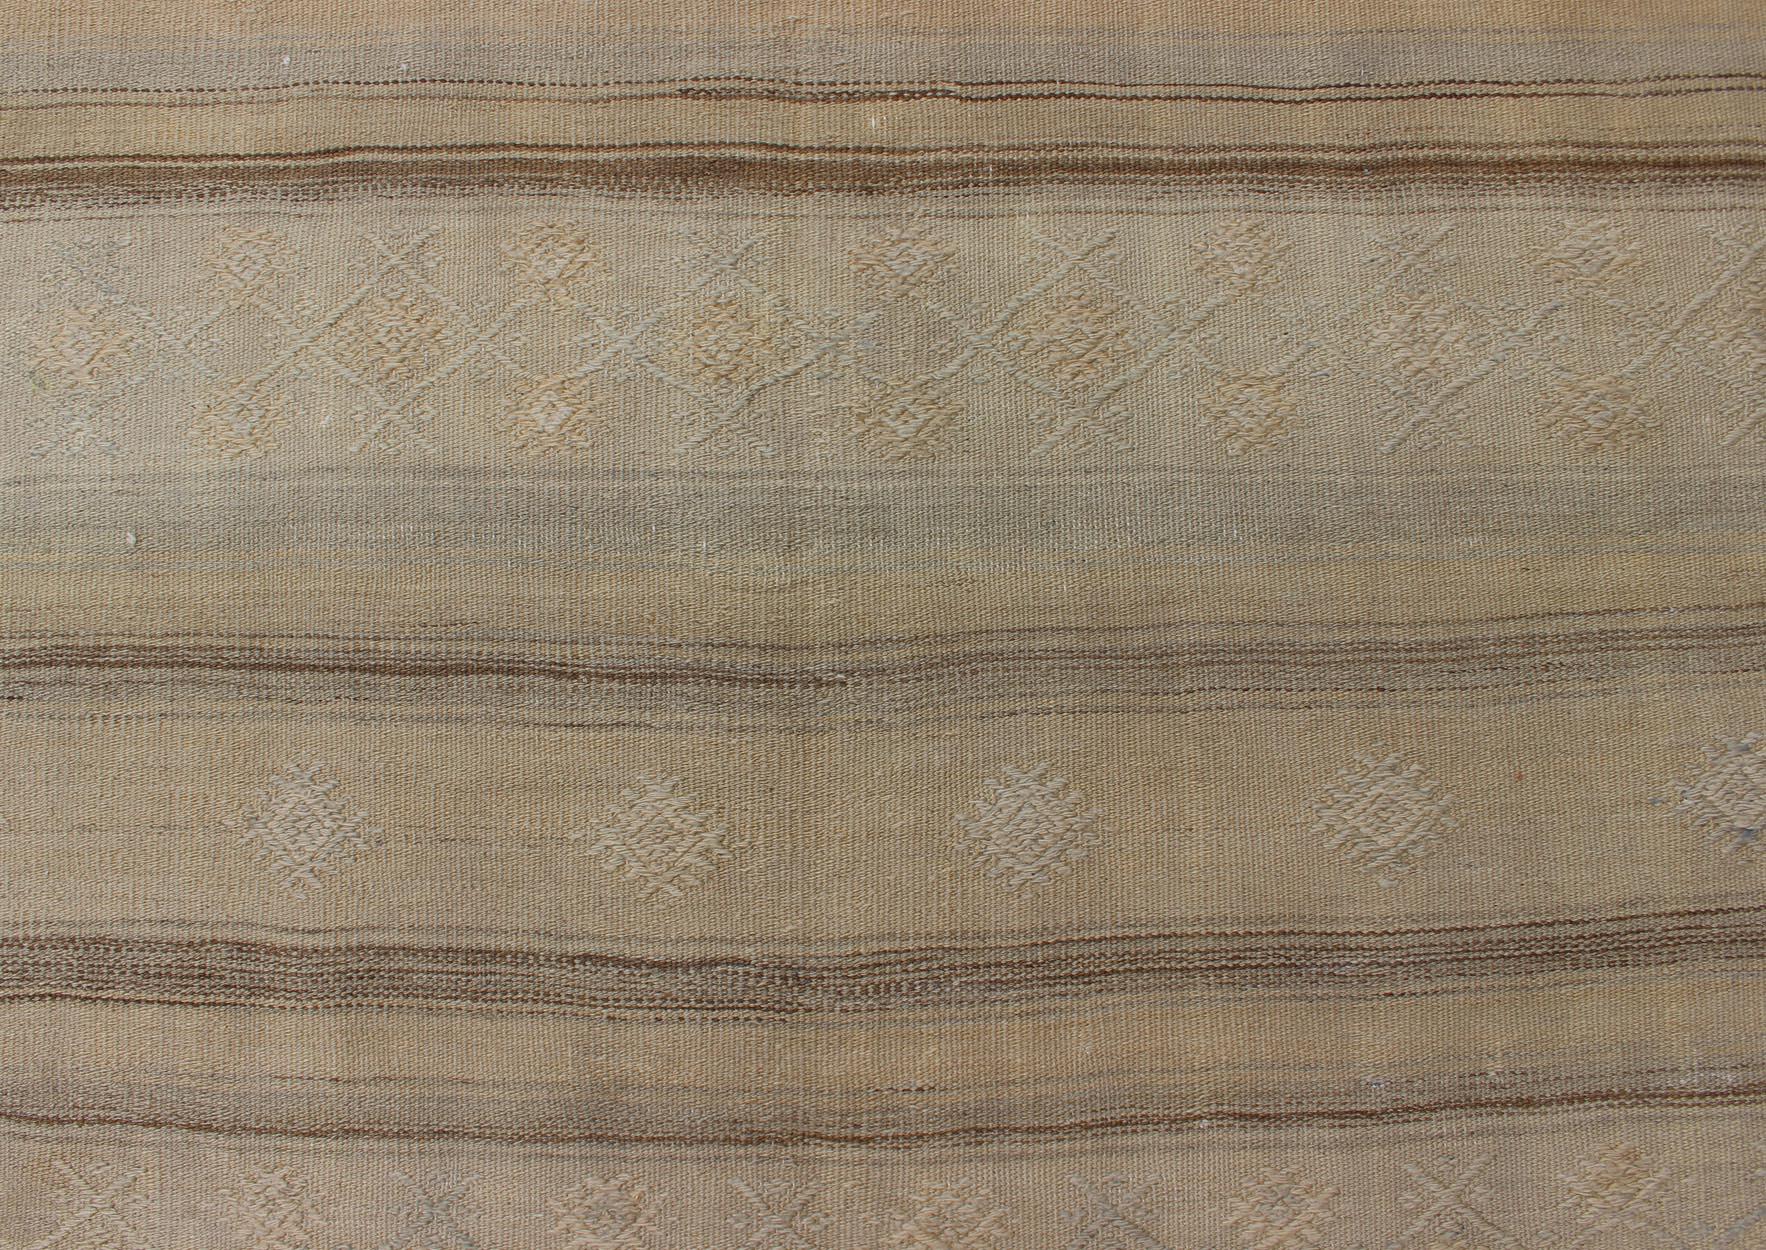 Vintage Turkish Kilim Gallery Rug with Stripe Design and Tribal Motifs in Brown 2